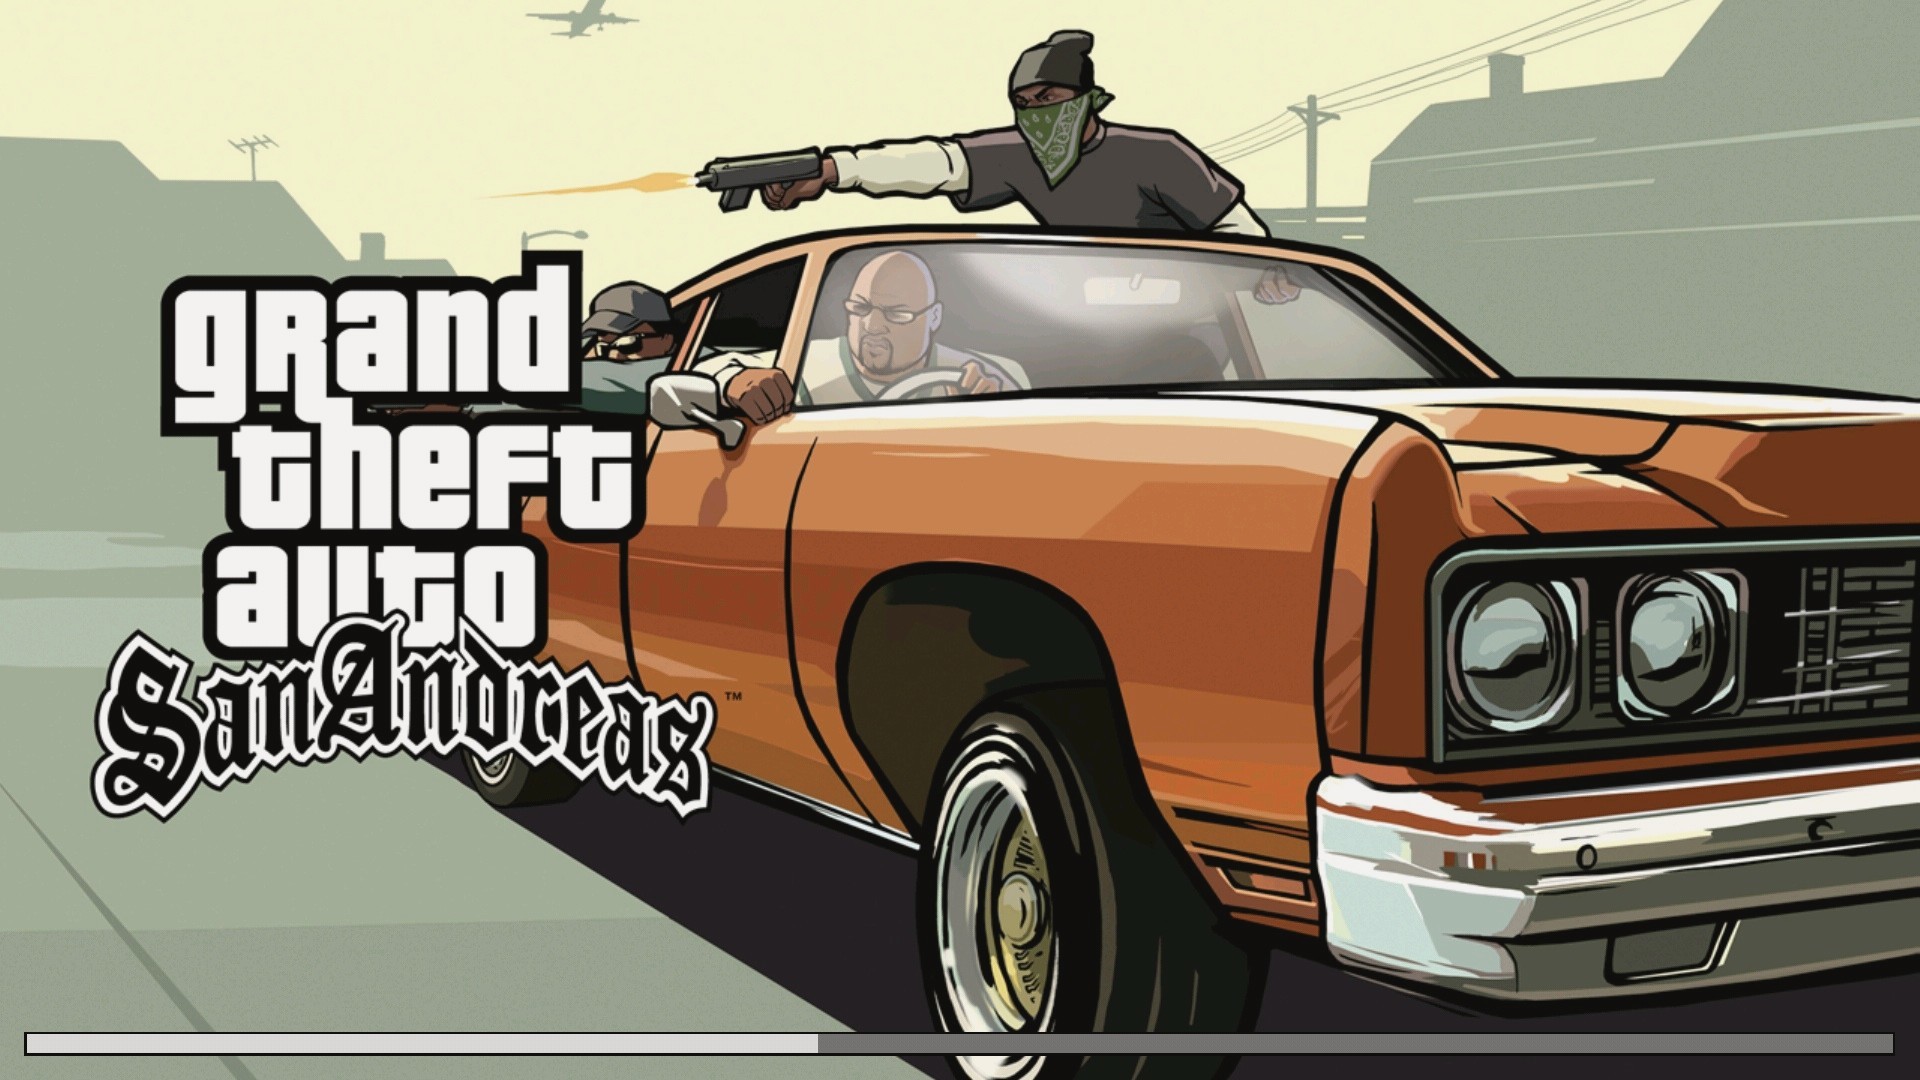 1920x1080 Grand Theft Auto San Andreas pics